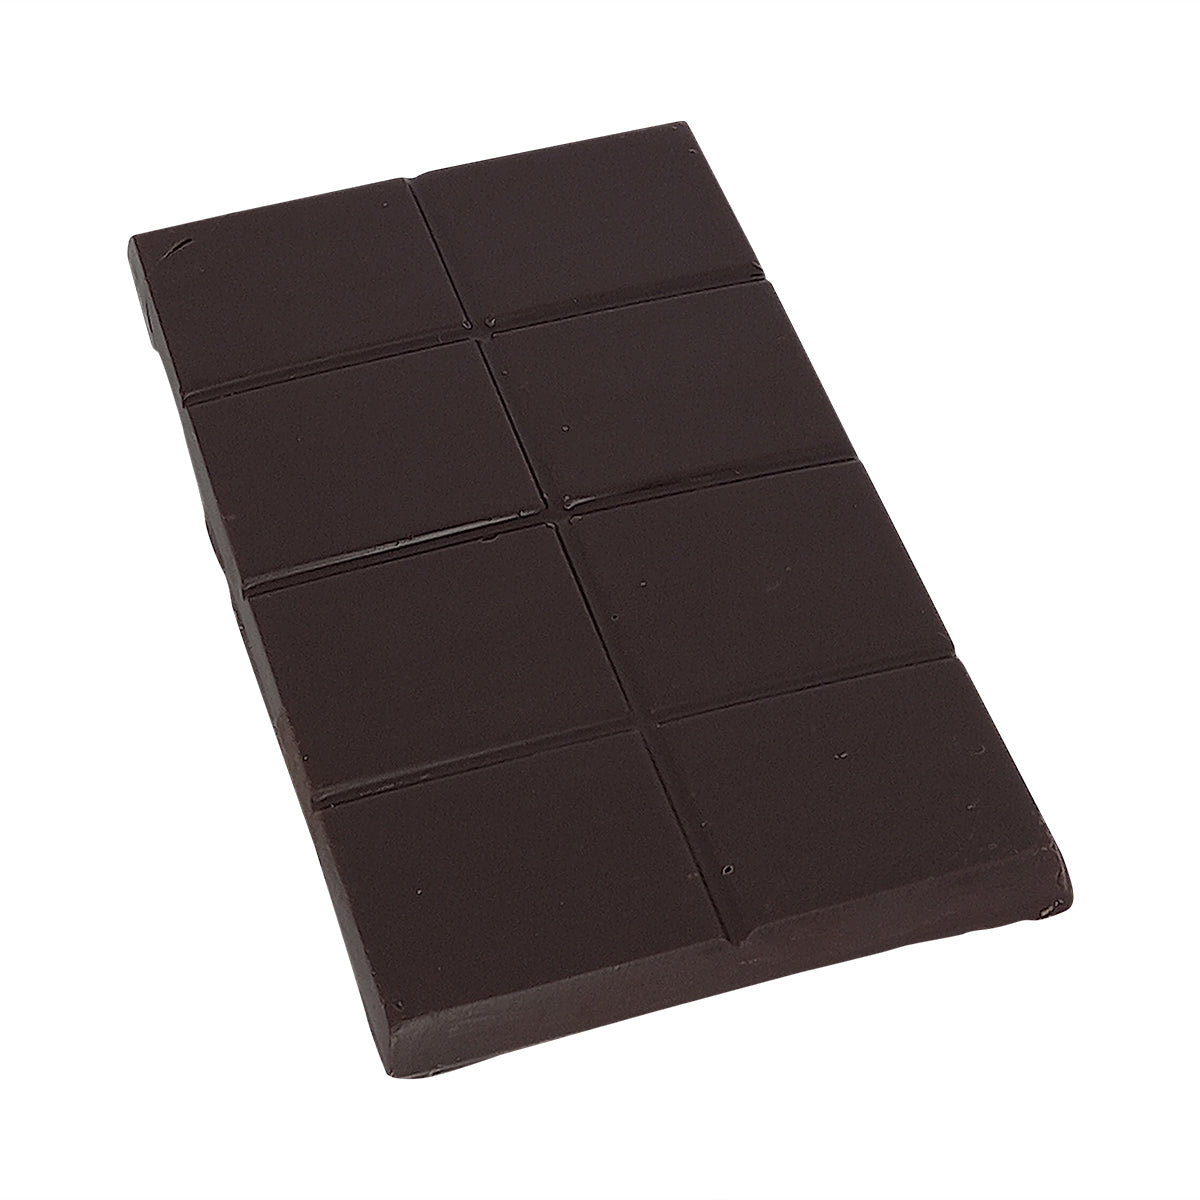 Organic 55% Chocolate Sweetened With Panela - Bars